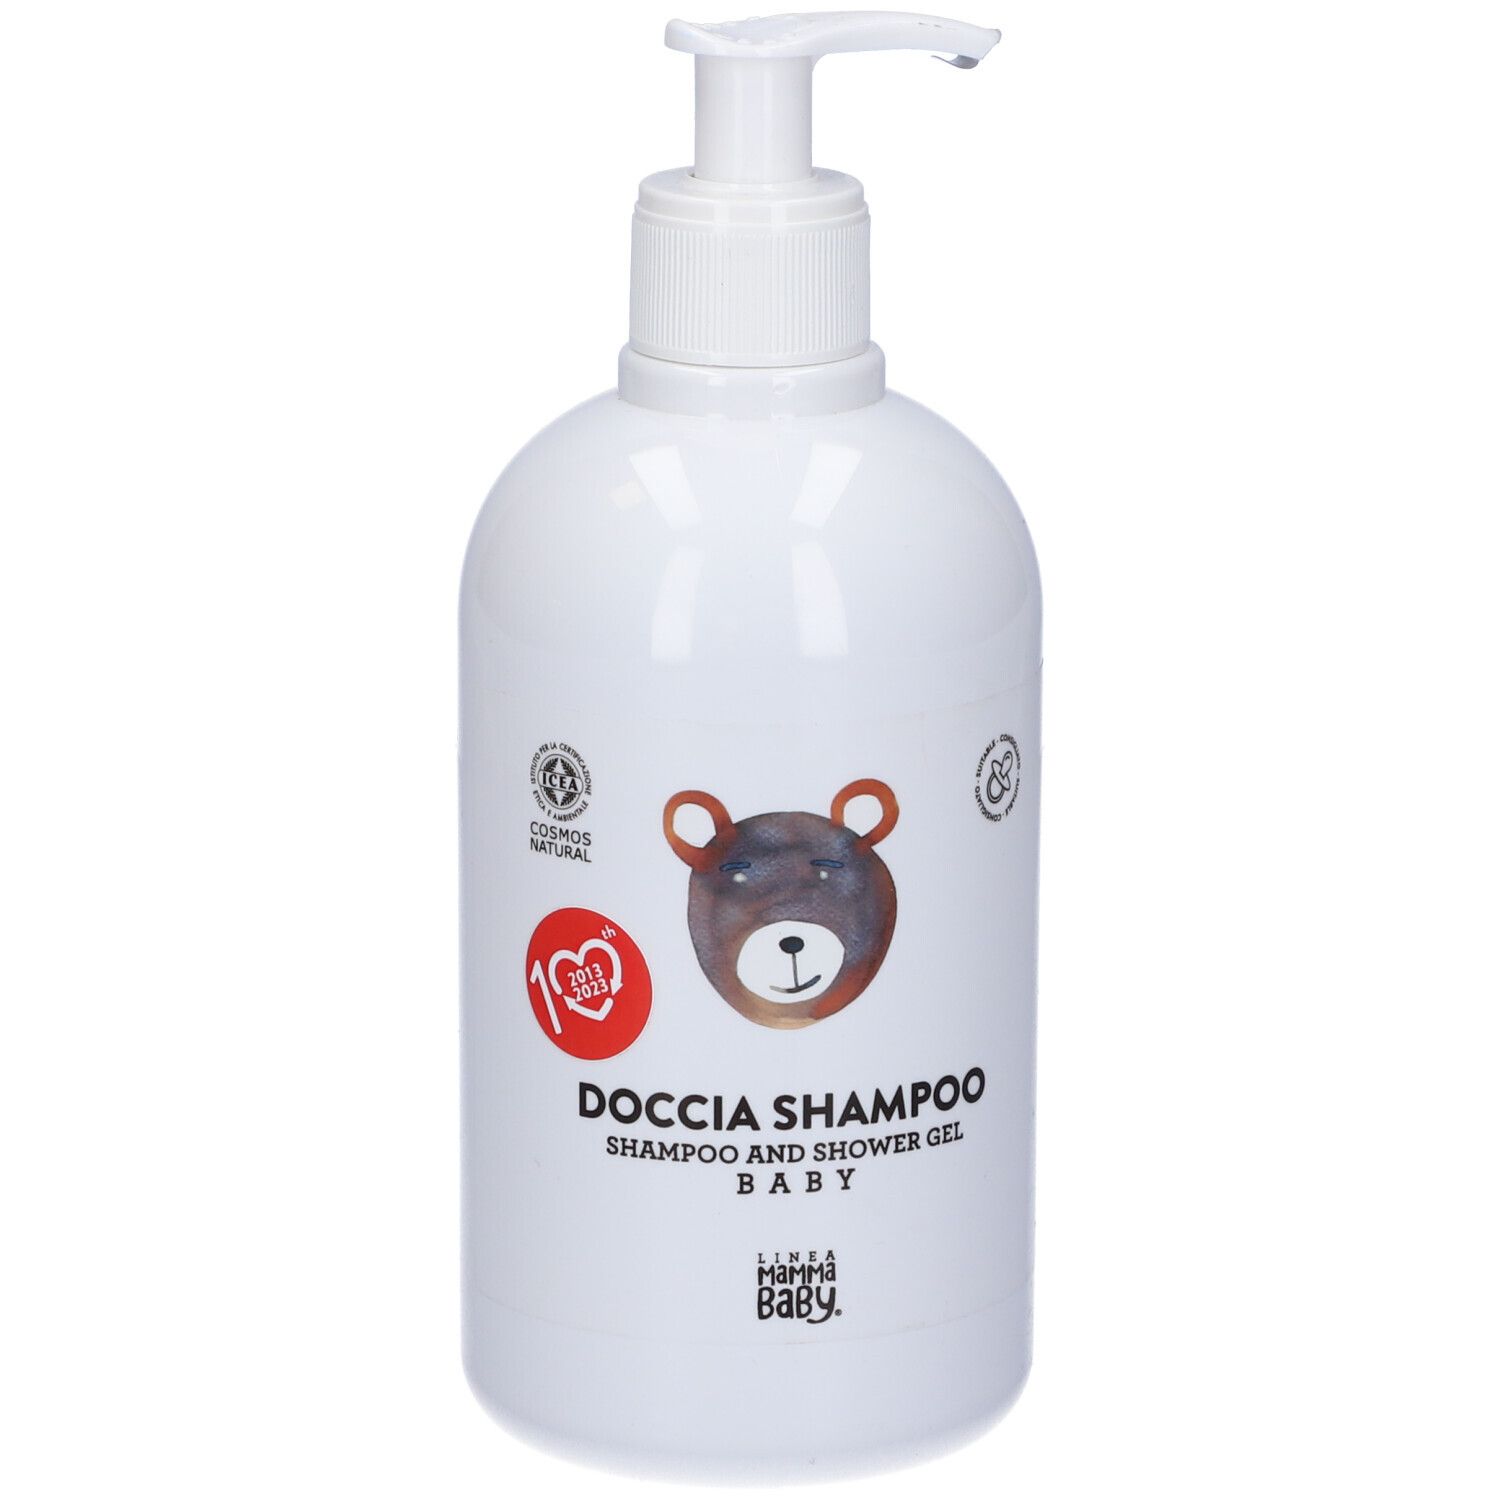 Mammababy Doccia Shampoo Baby Cosmos Natural 500 Ml